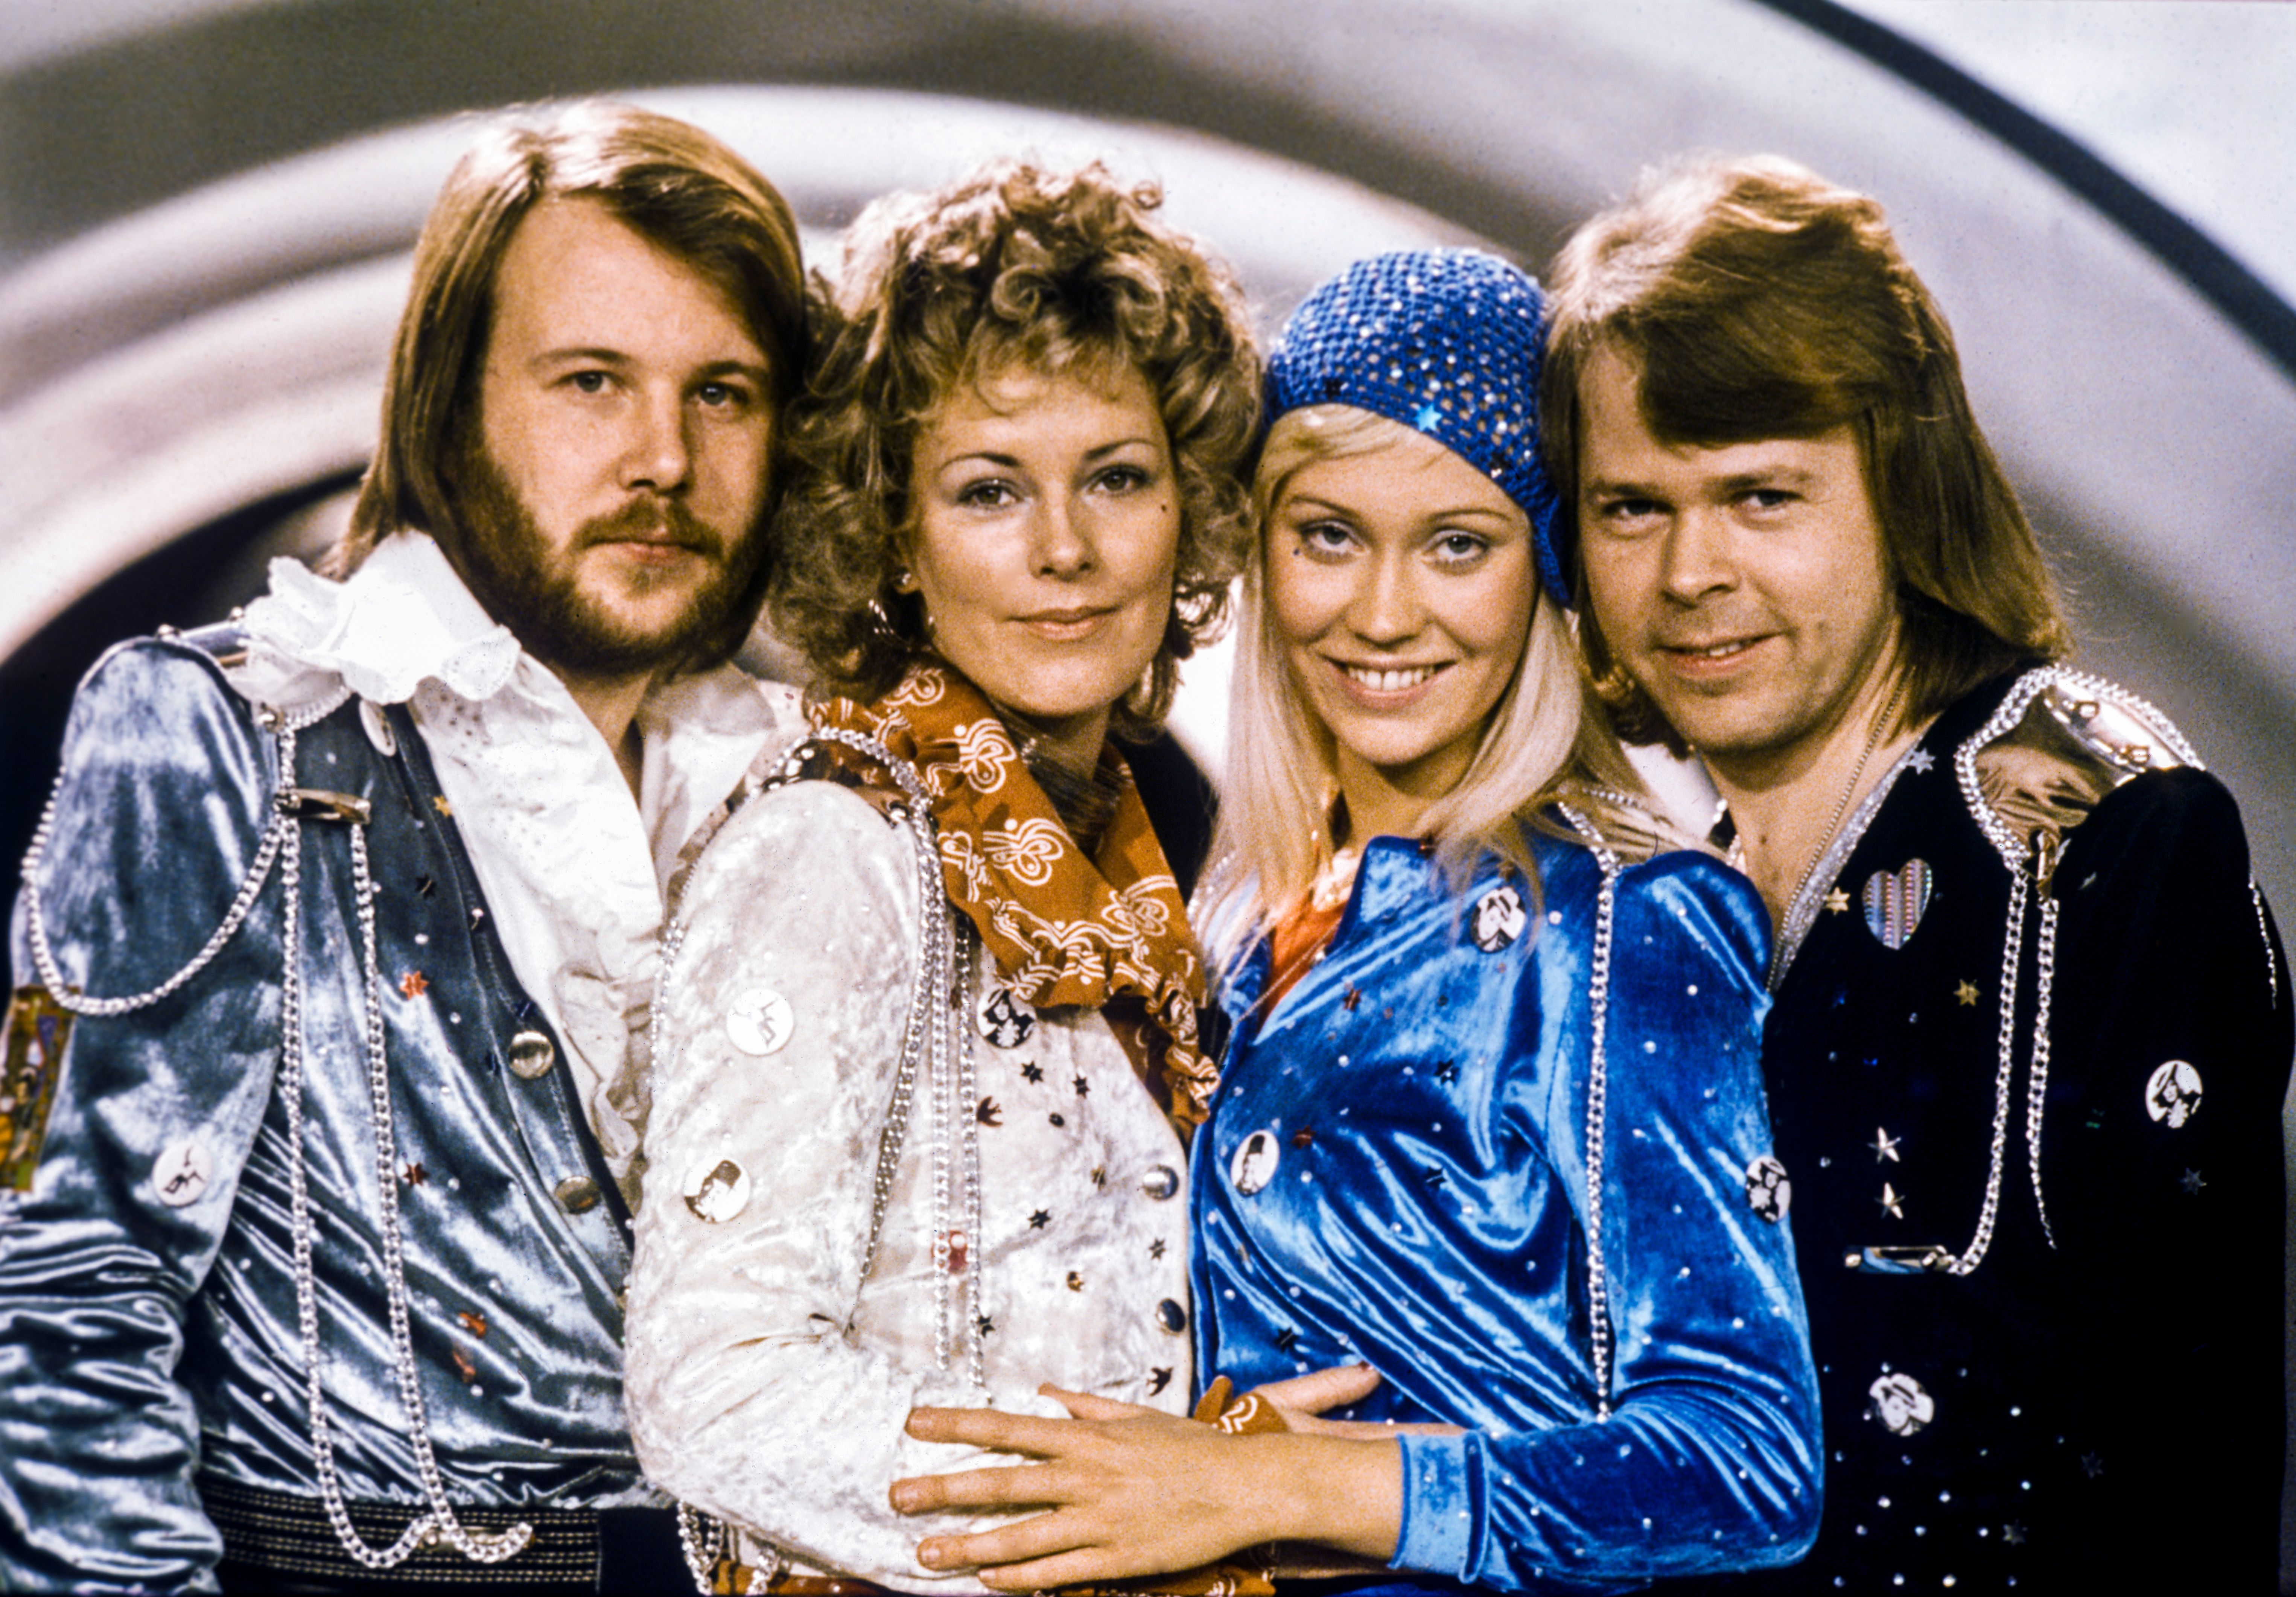 'Dancing Queen' by ABBA same-sex wedding song